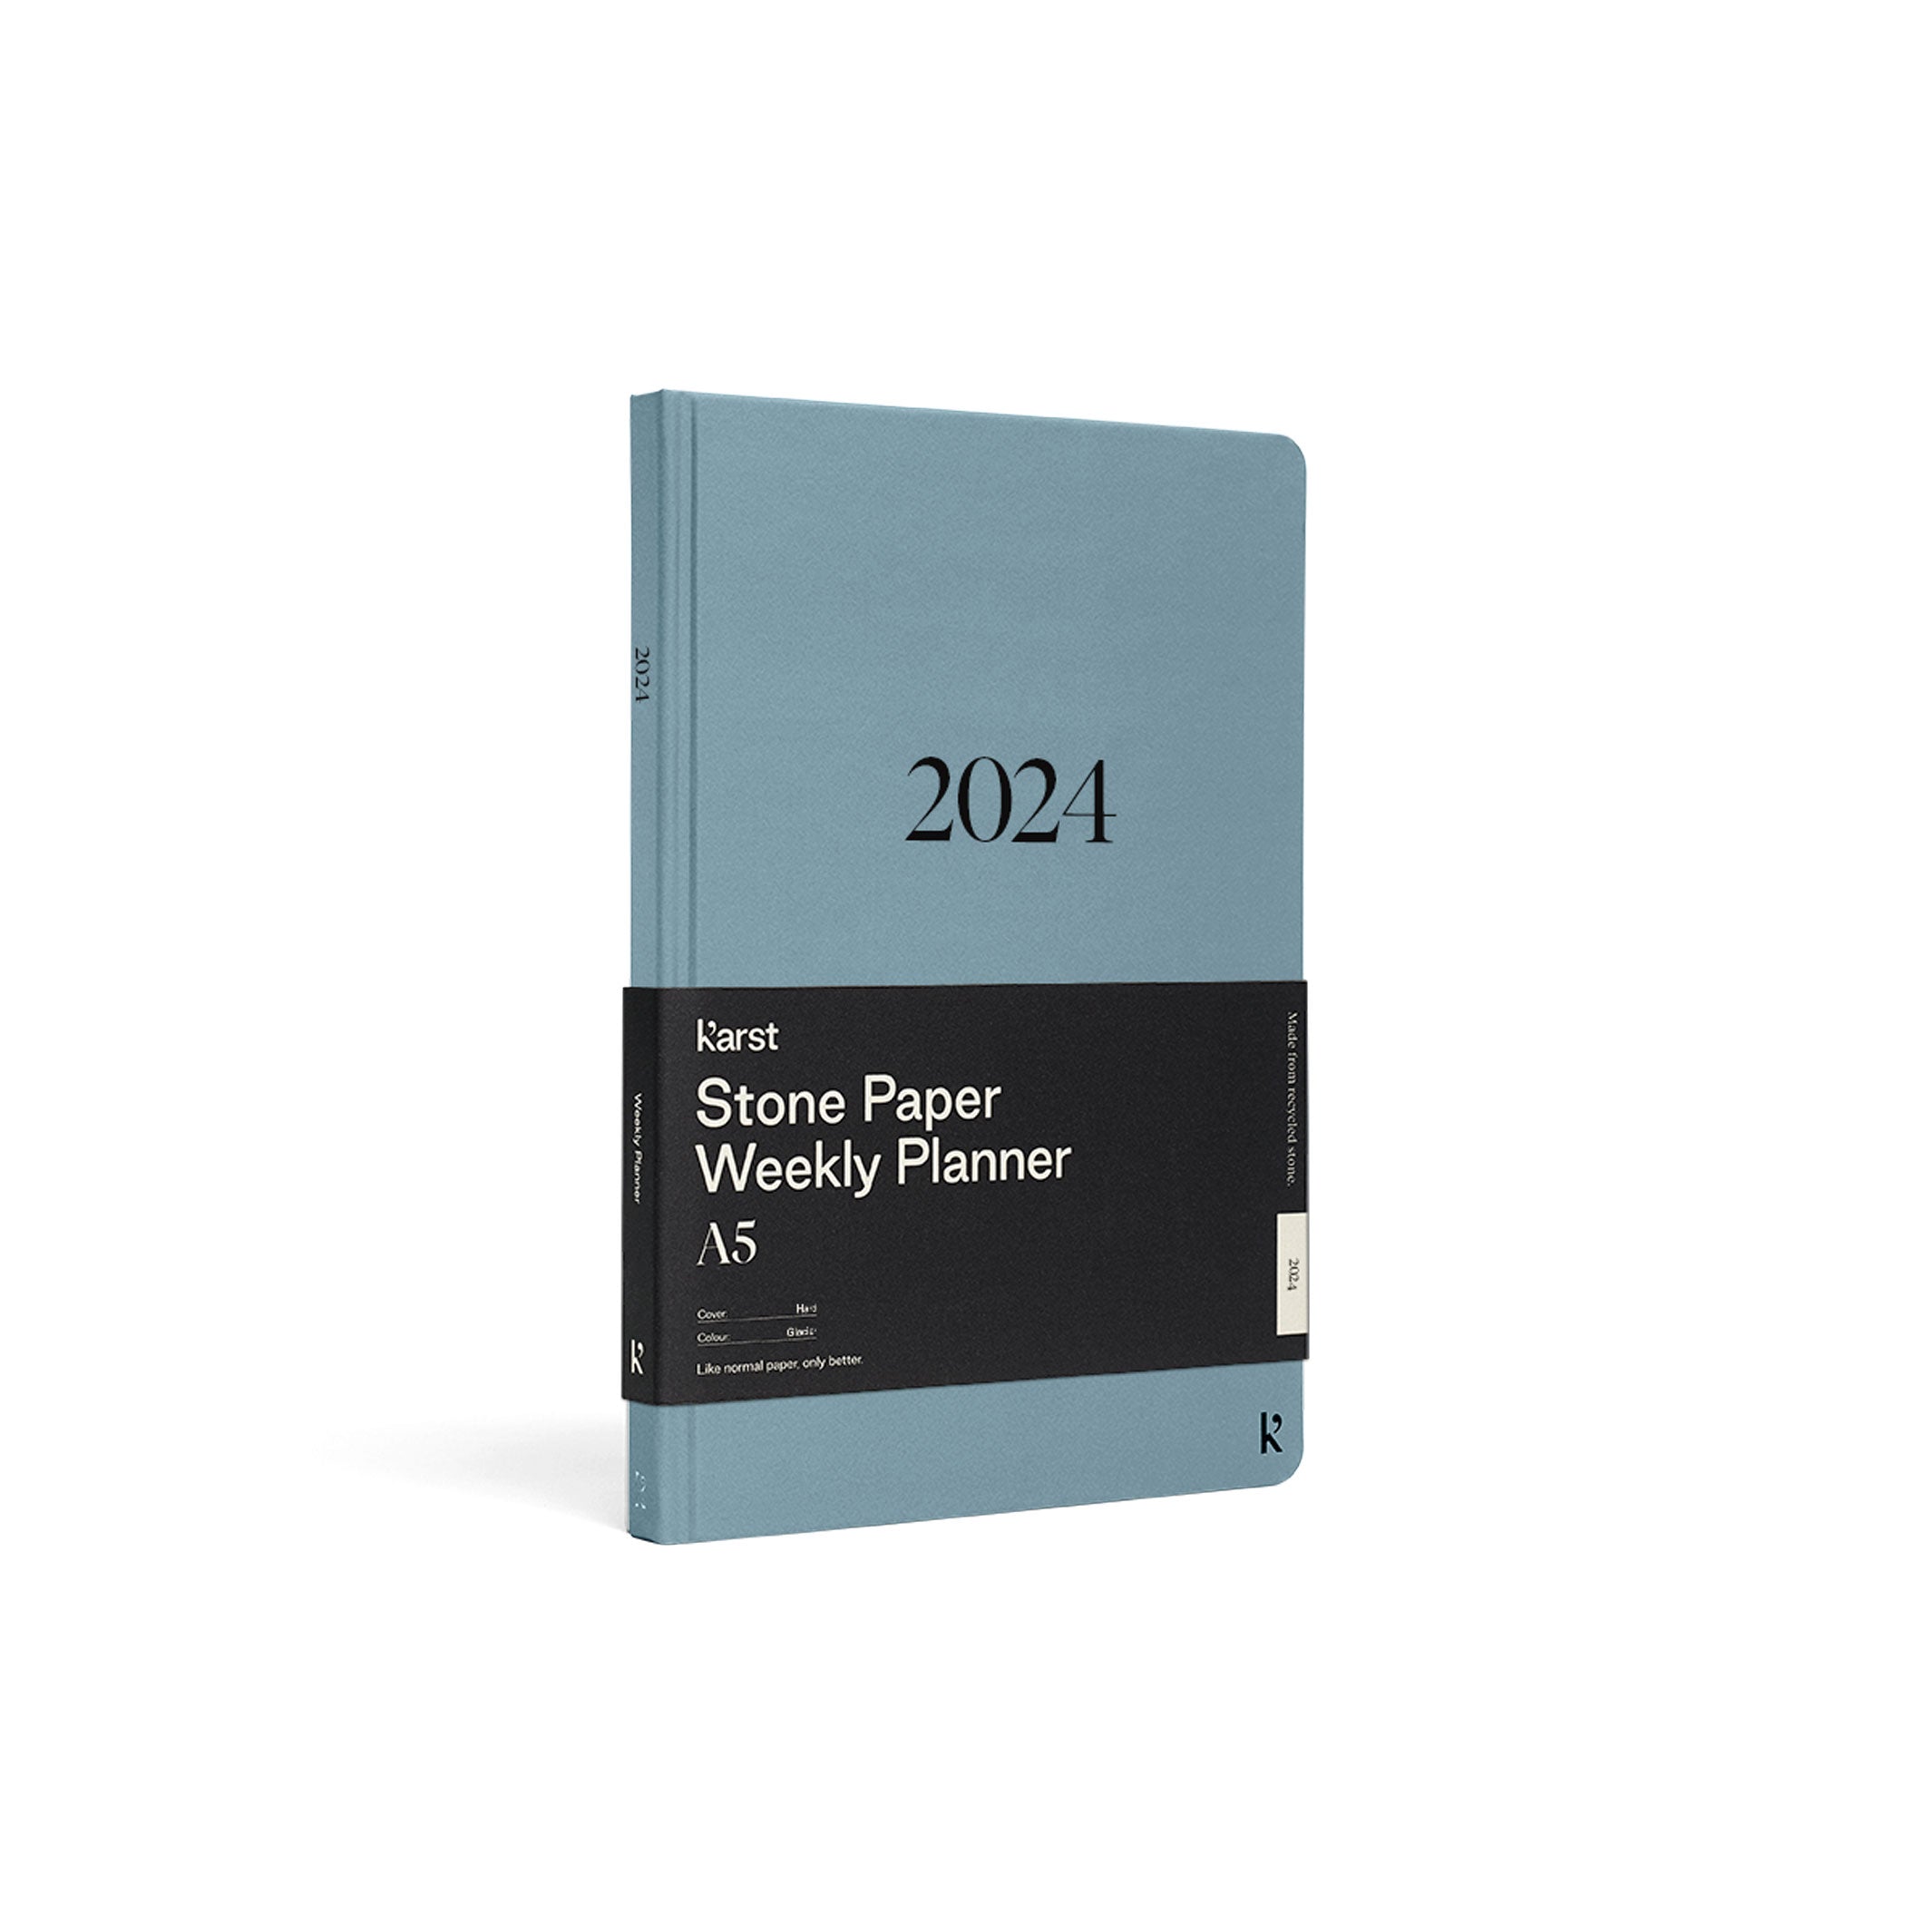 WEEKLY PLANNER 2024 | WOCHENPLANER | Hardcover A5 | Karst Stone Paper